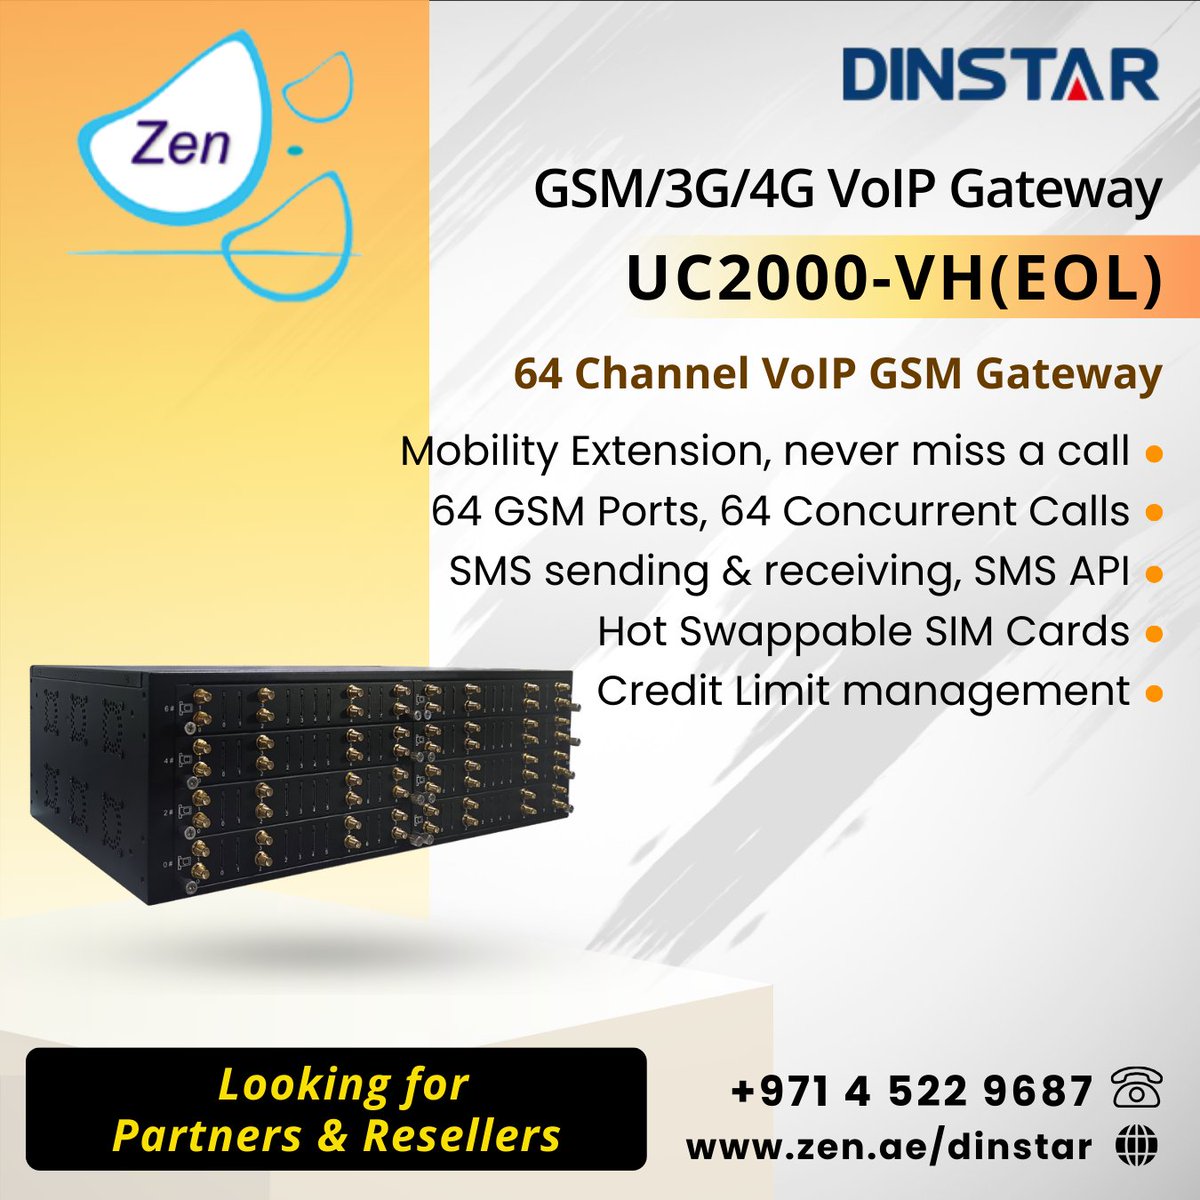 #dinstar UC2000-VH (EOL) GSM/3G/4G VoIP Gateway
64-channel VoIP GSM Gateway
Looking for partners & resellers

smpl.is/8ky6u

#3cx #zenitdxb #zenit #businesscommunication #dubaistartup #3cxhosting #simhosting #saudistartups